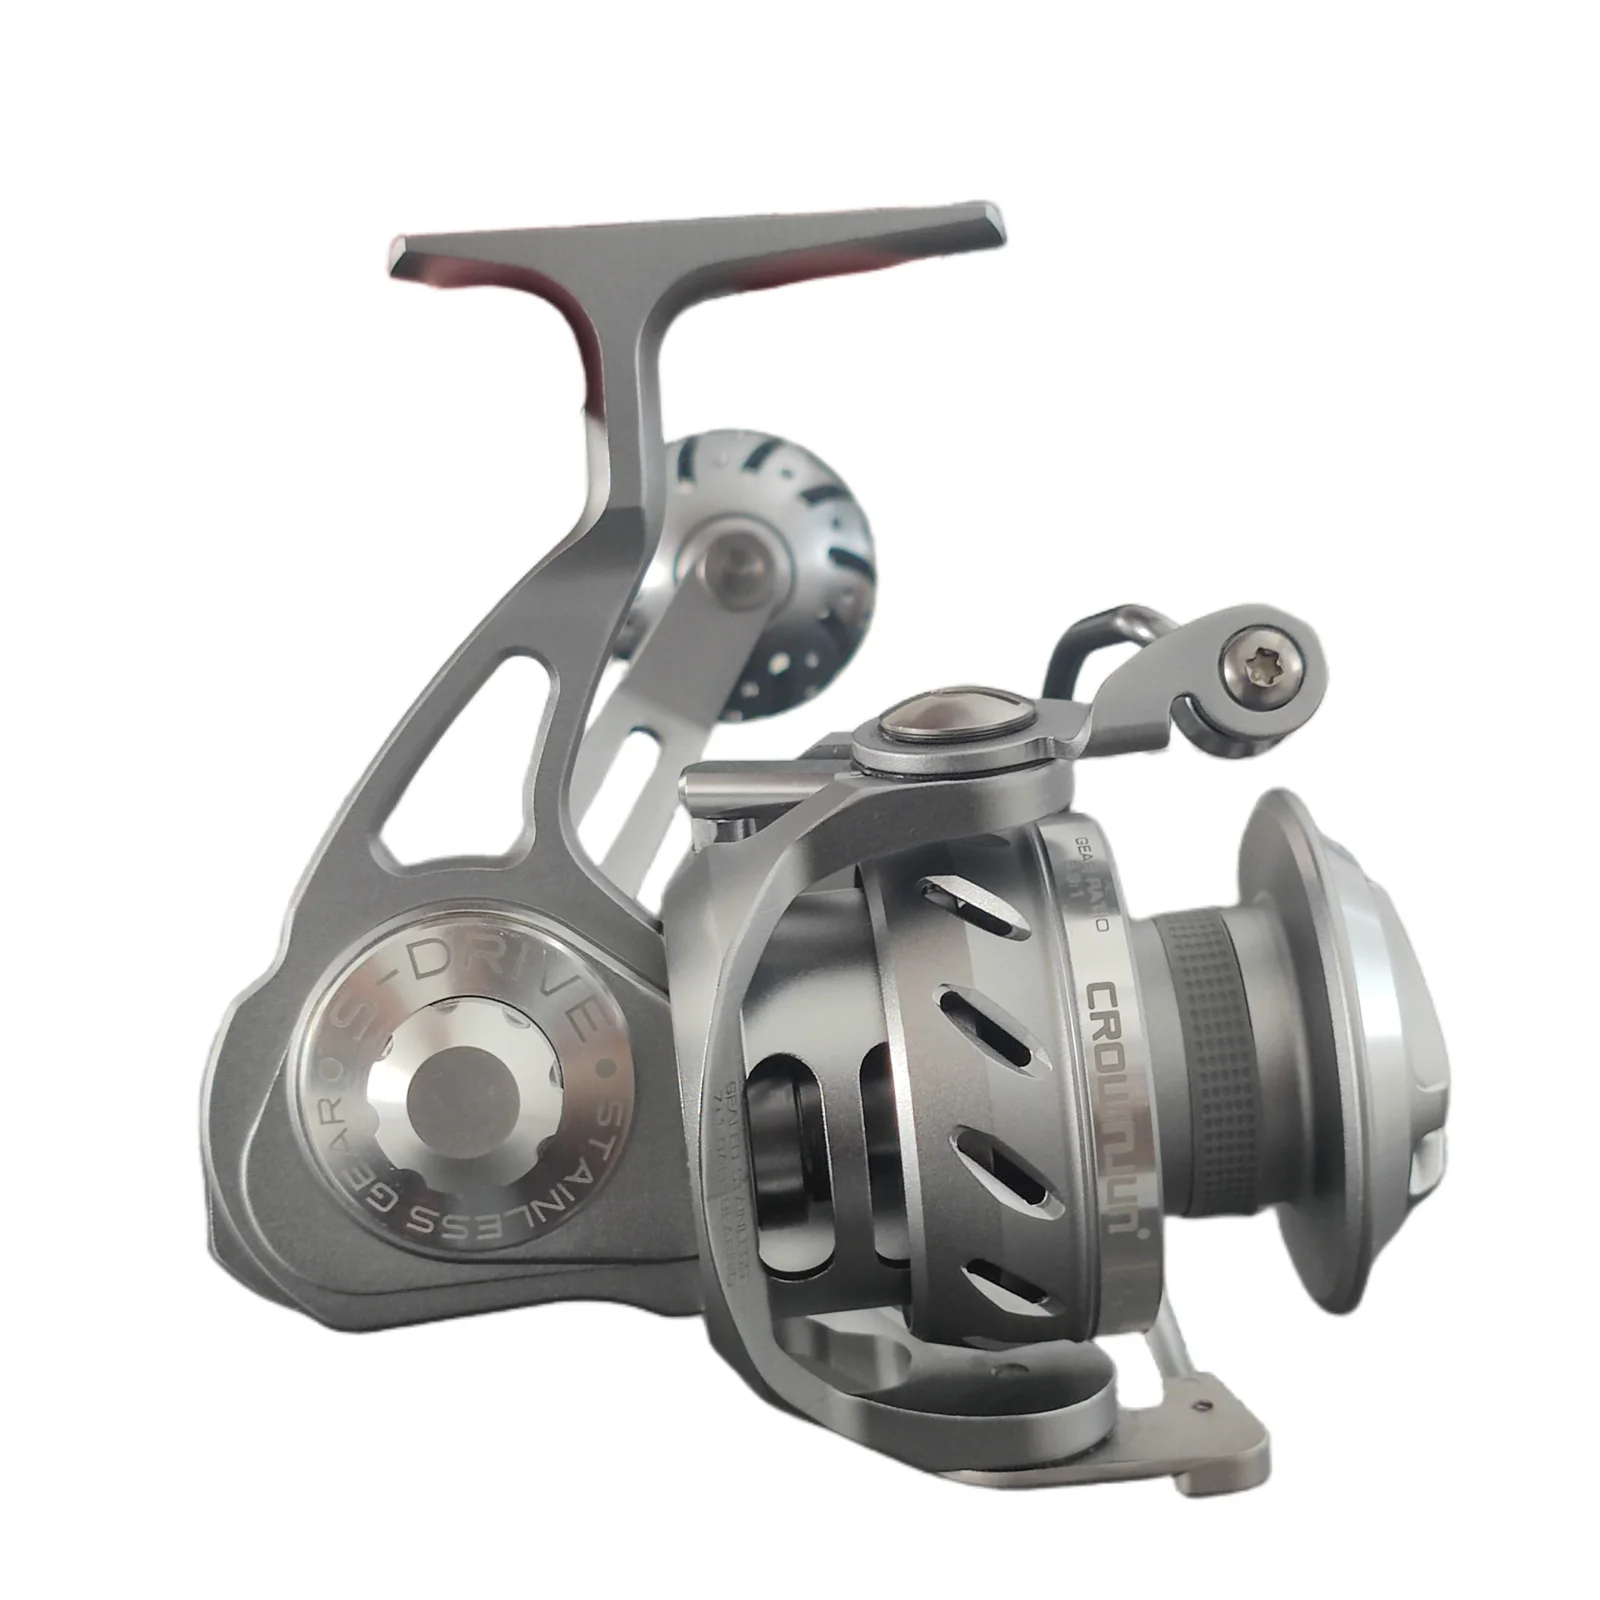 

Lightweight Fishing Reels 3000-8000 Metal Spool 25KG Max Drag Saltwater Carp Fishing Spinning Reel Catch Big Fish